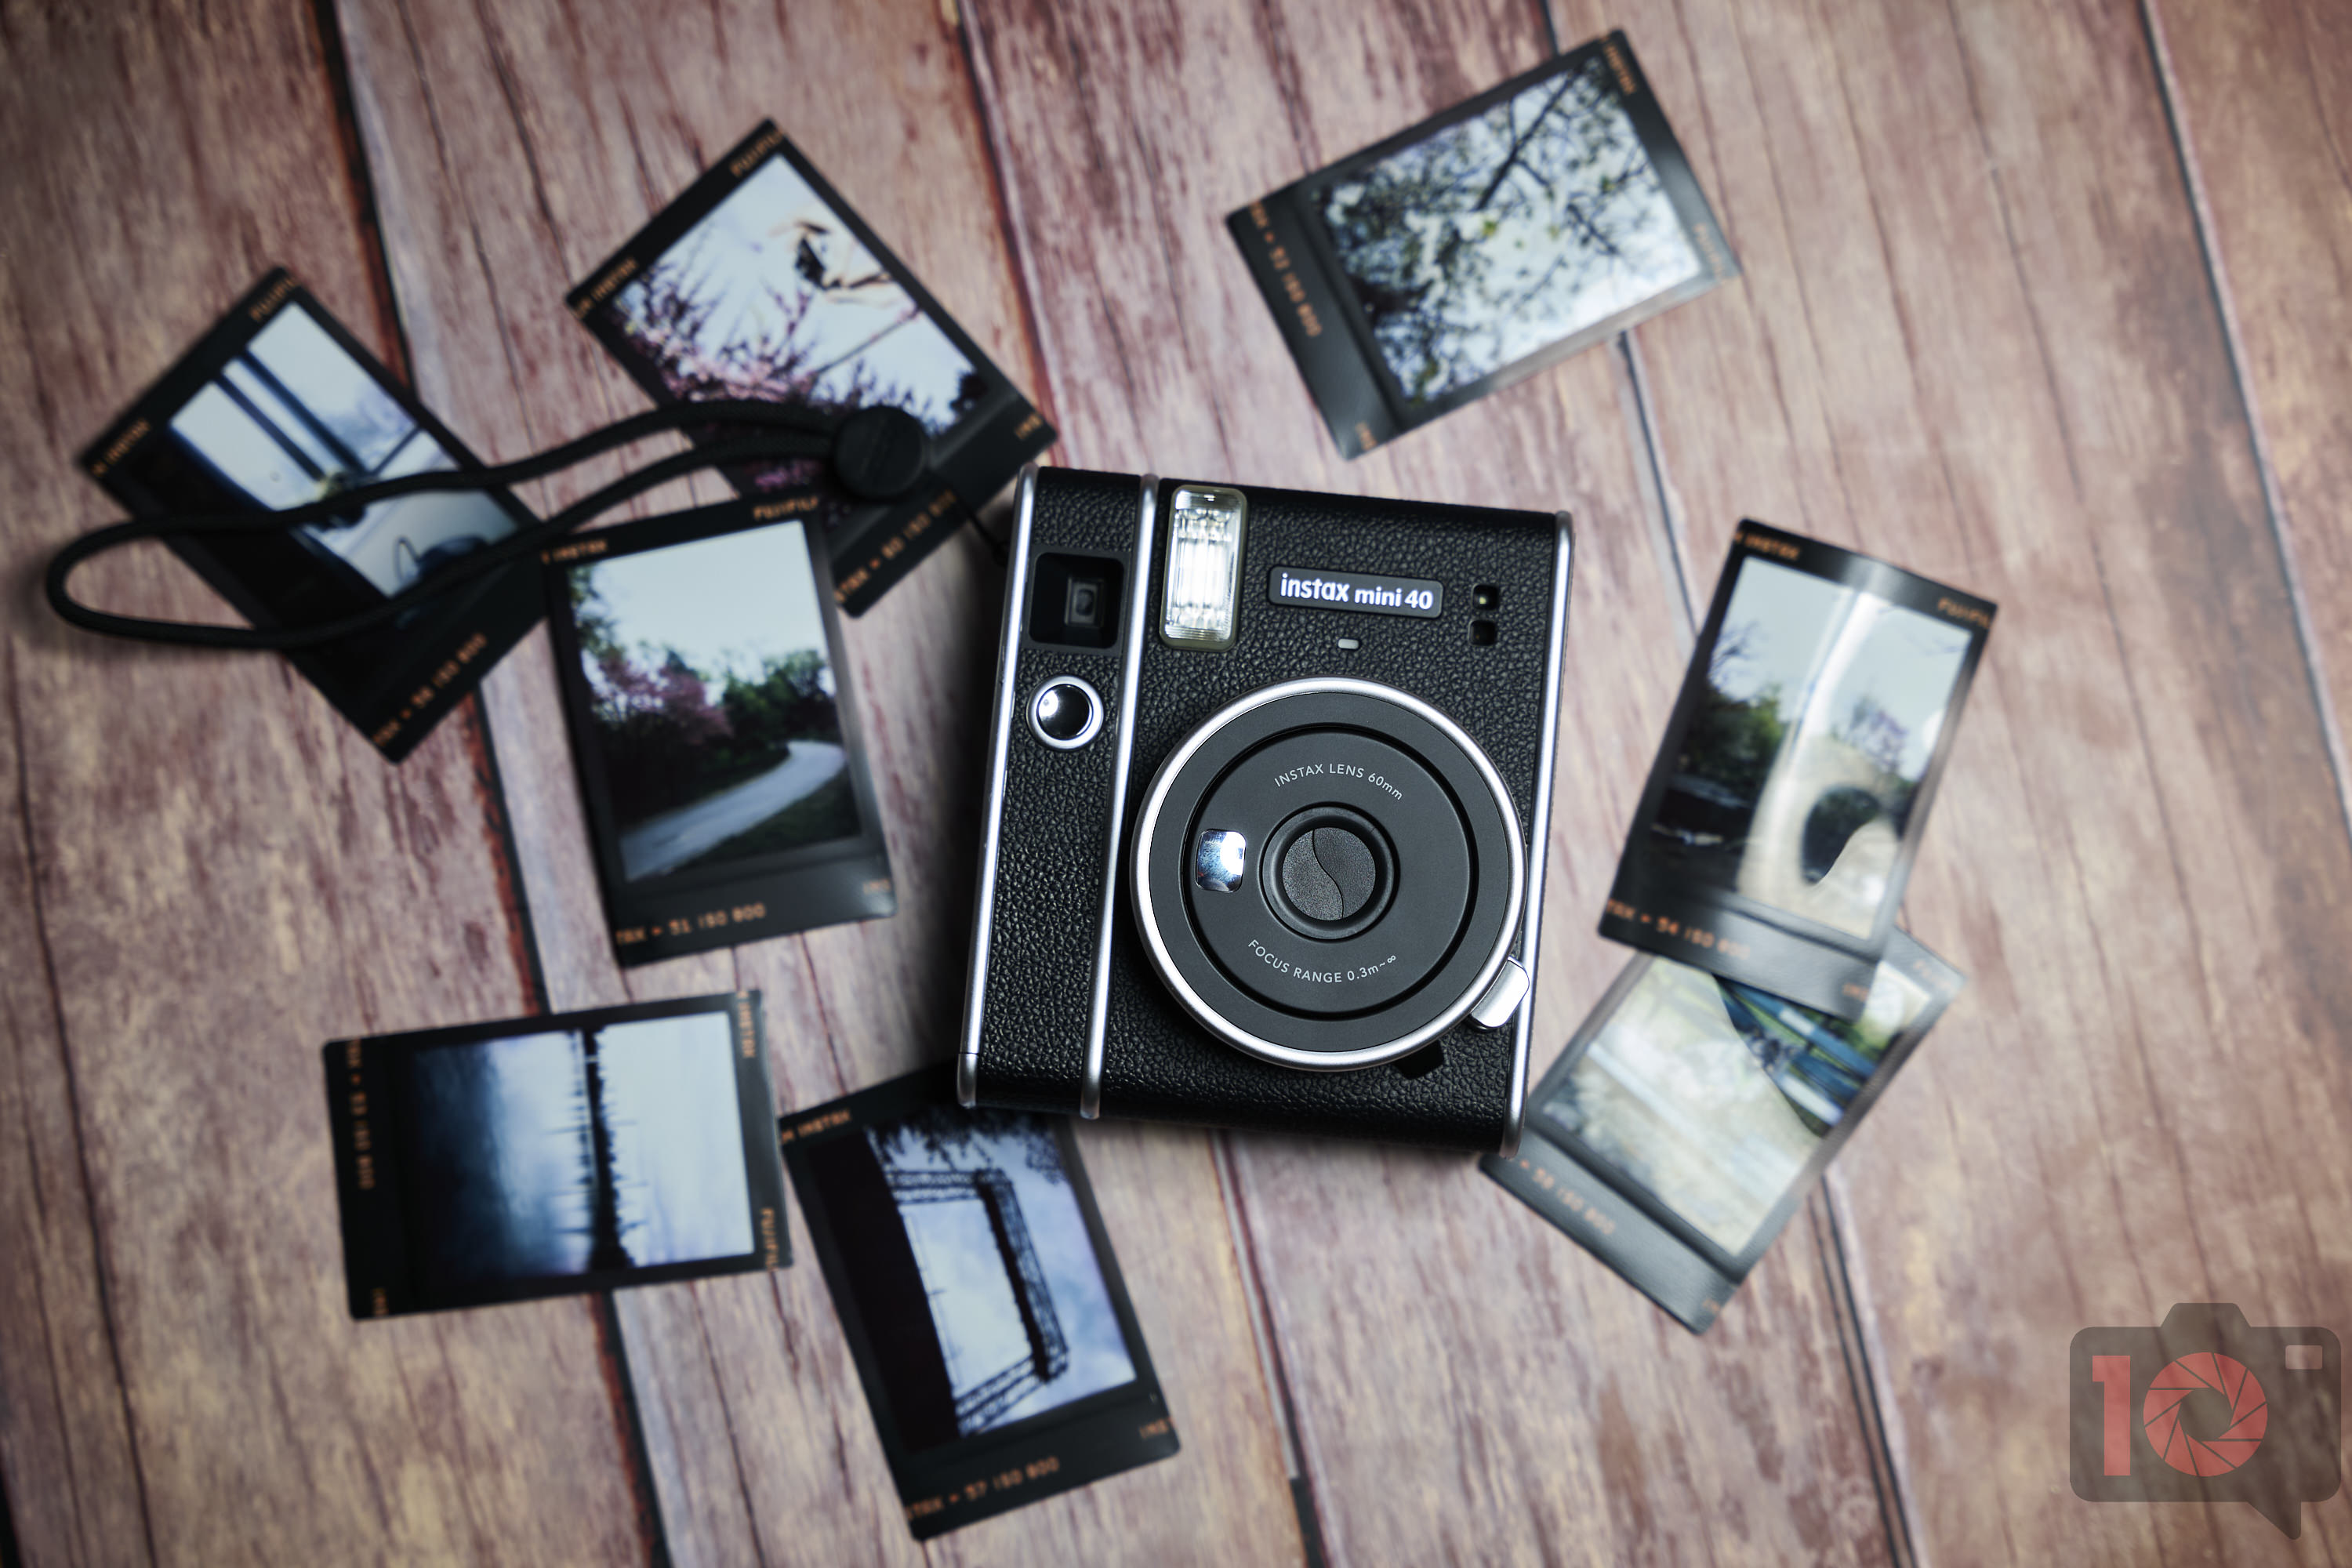 Fujifilm Instax Mini Review with Sample Photos